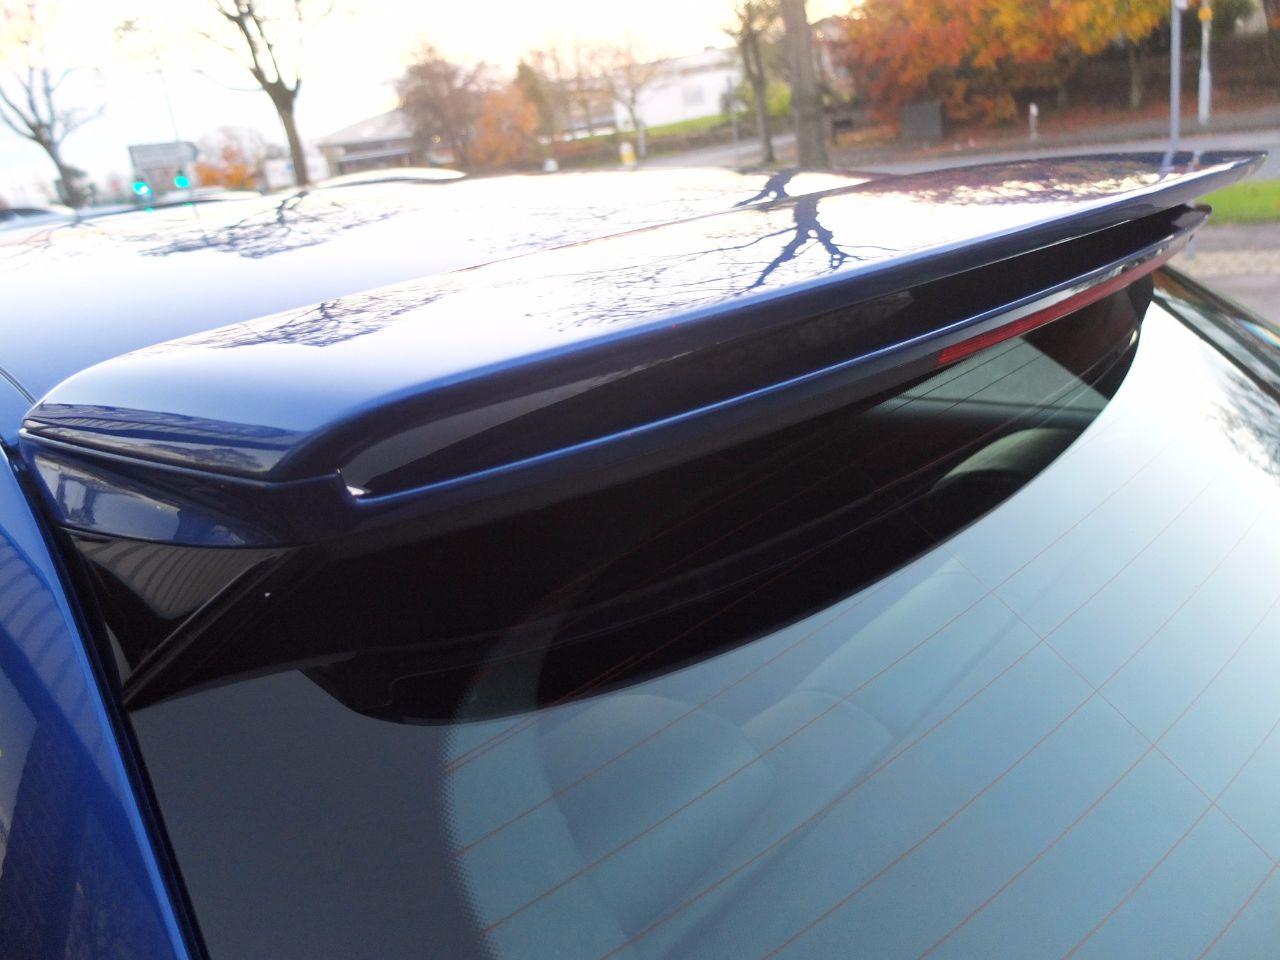 Audi A1 S1 2.0TFSI quattro 3 door 231ps Hatchback Petrol Sepang Blue Metallic